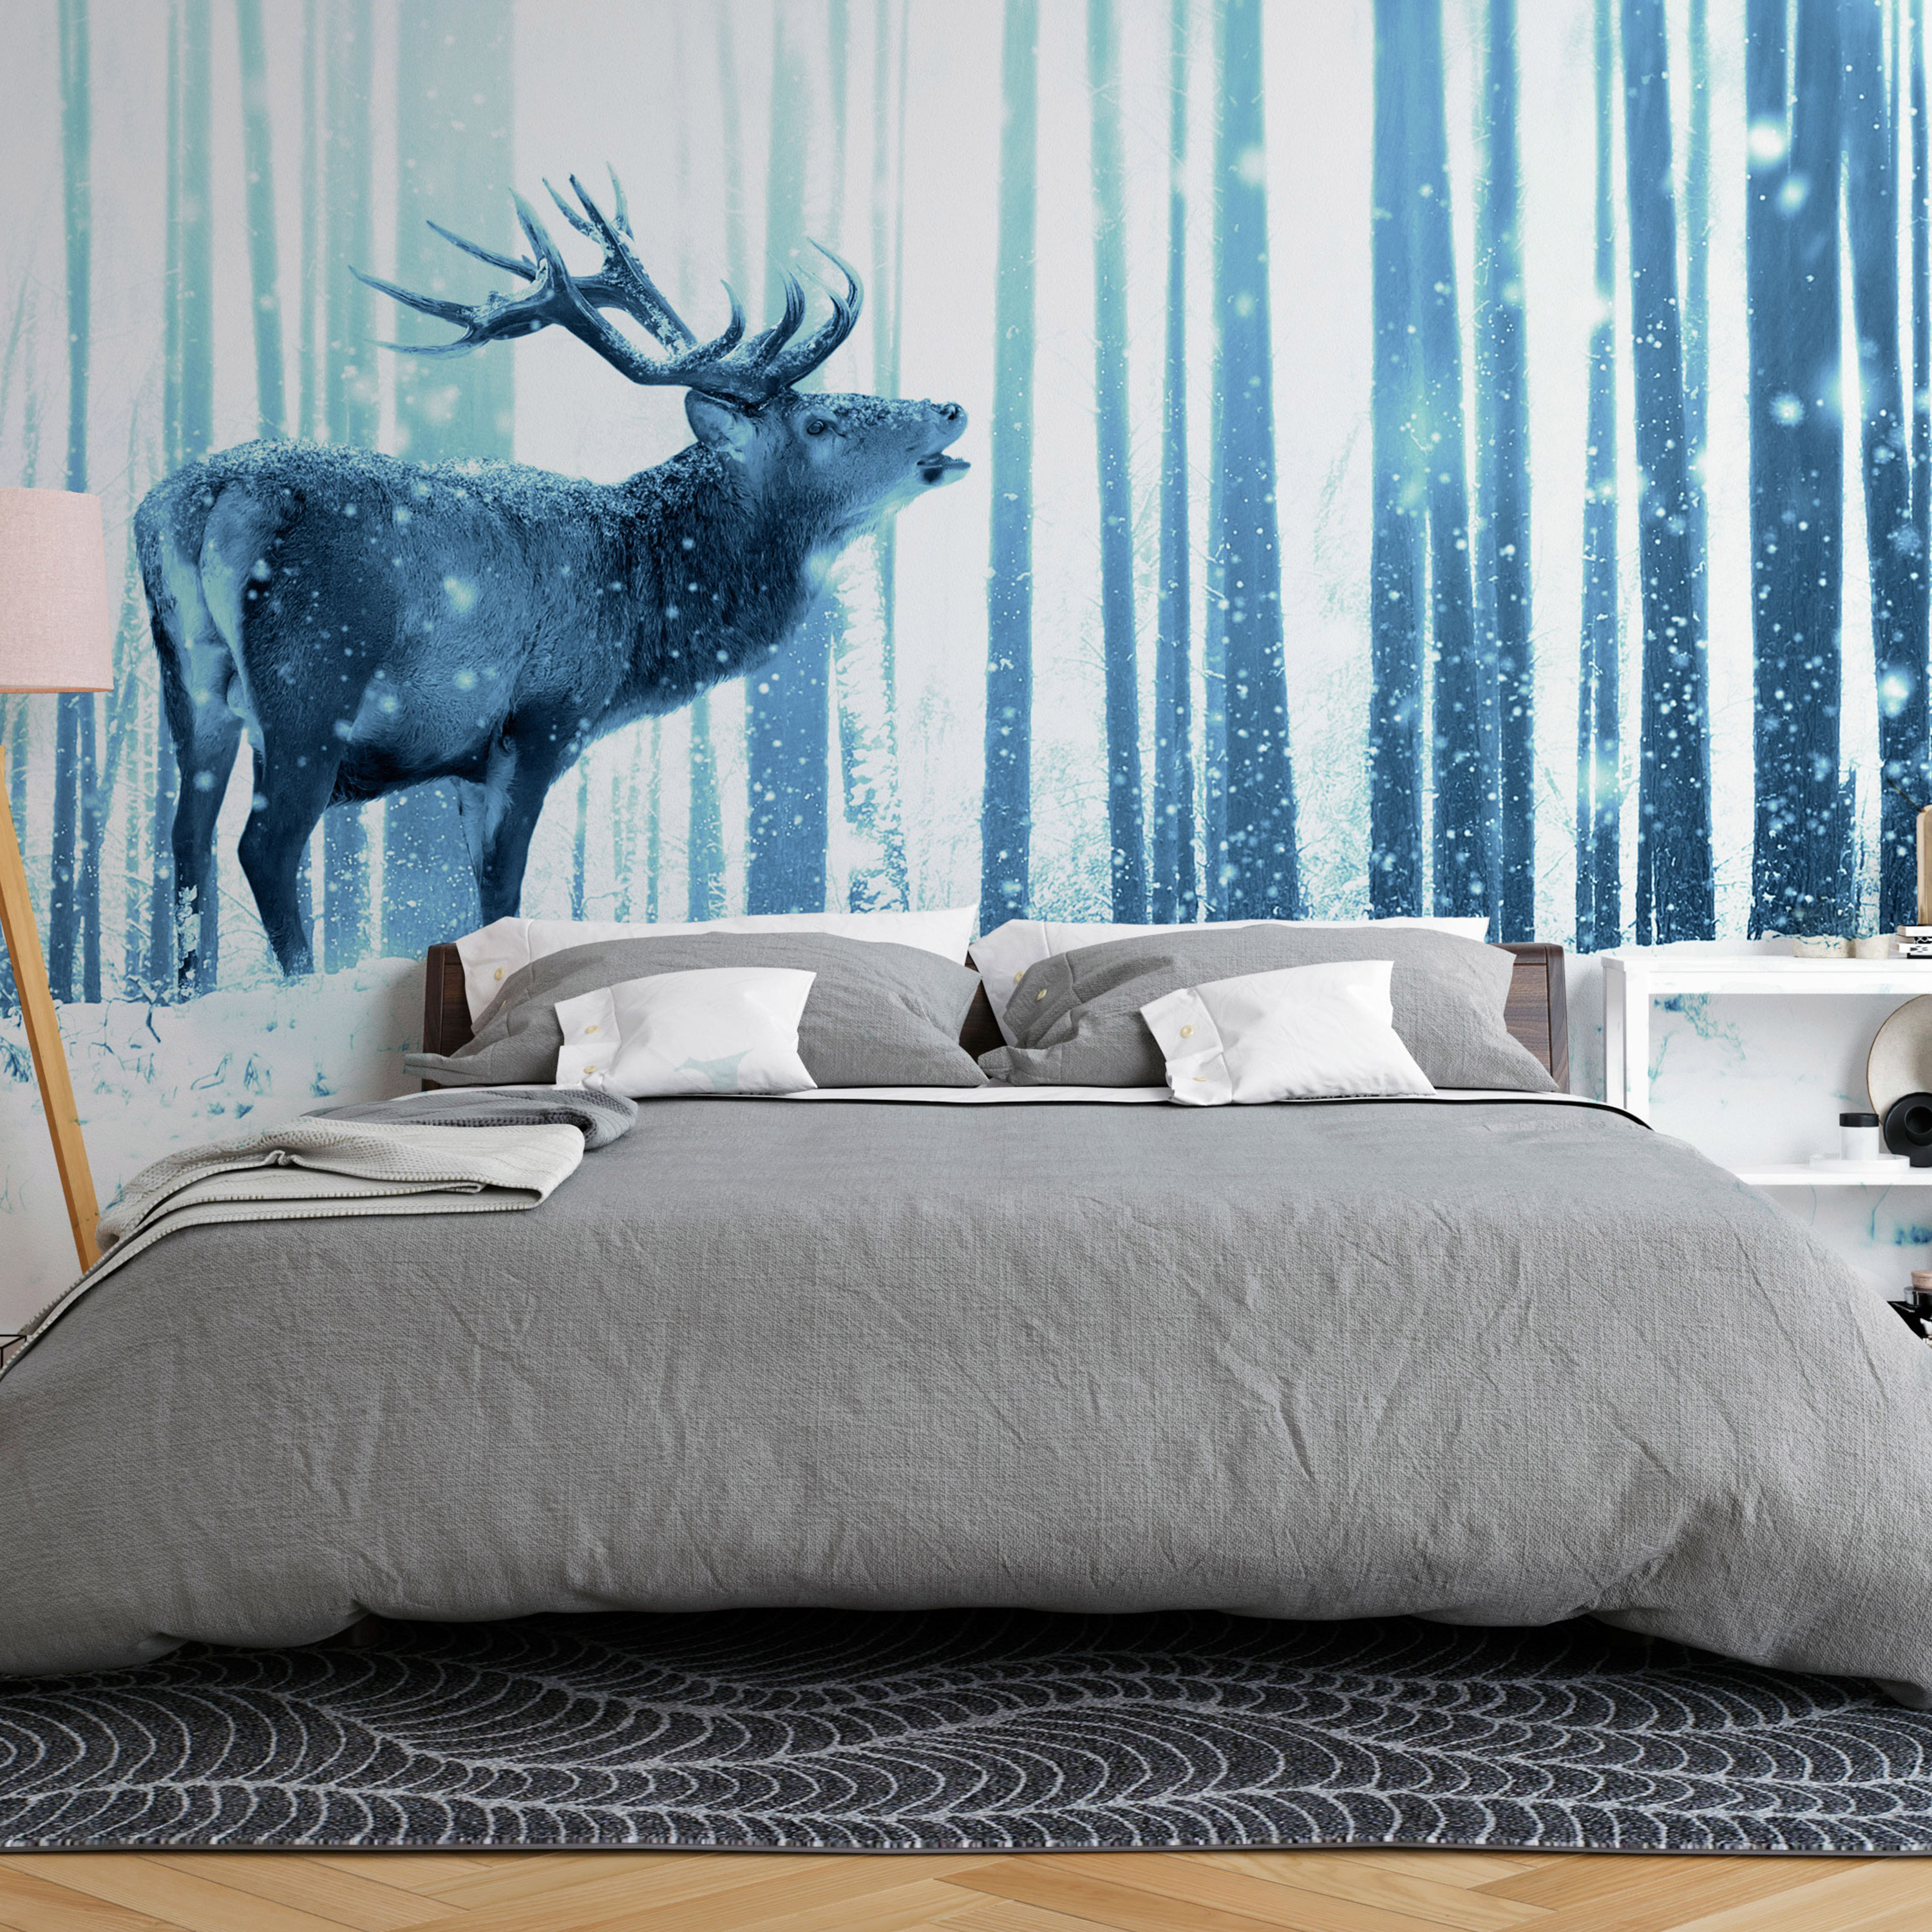 Self-adhesive Wallpaper - Deer in the Snow (Blue) - 294x210